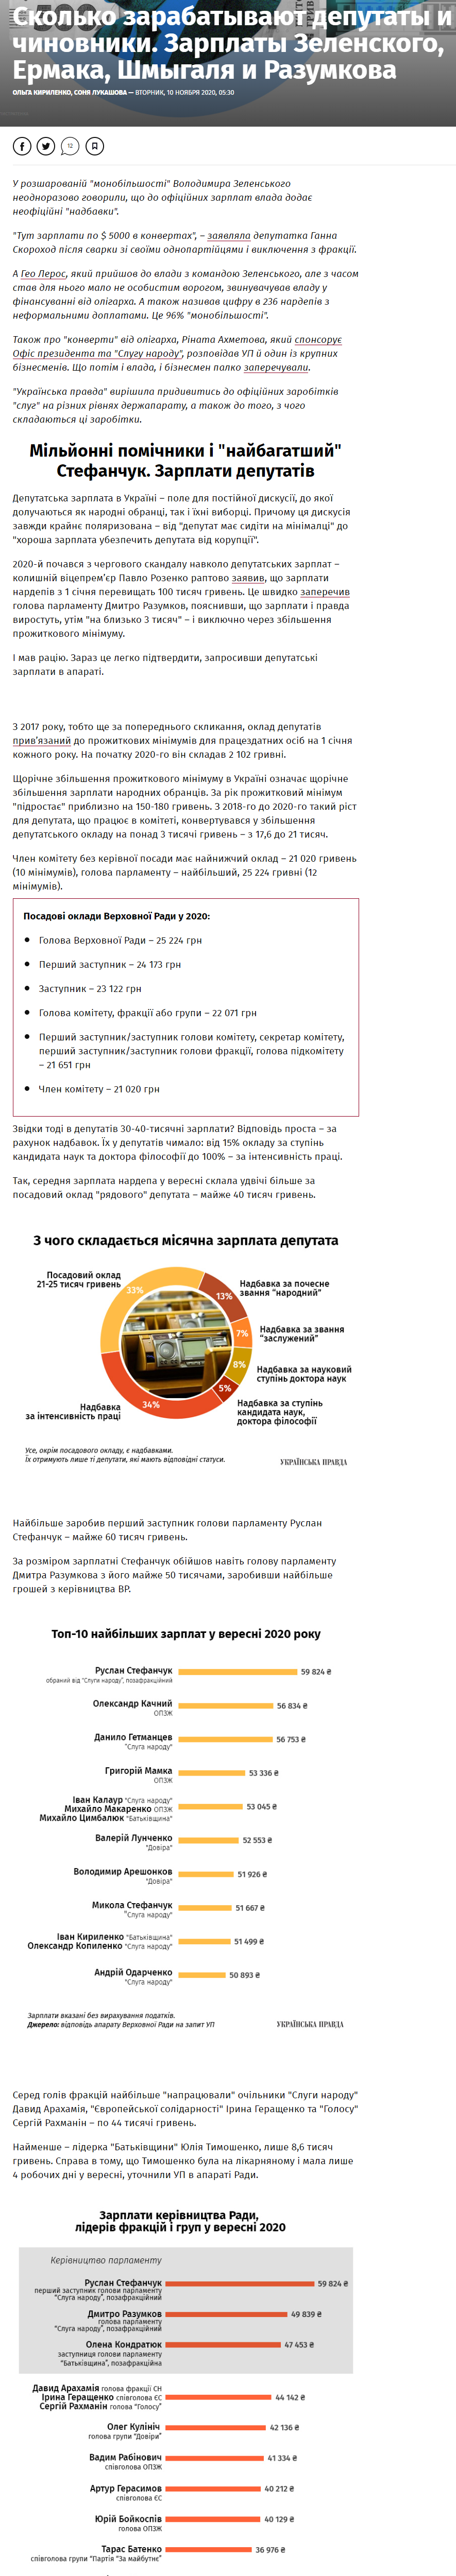 https://www.pravda.com.ua/rus/articles/2020/11/10/7272974/